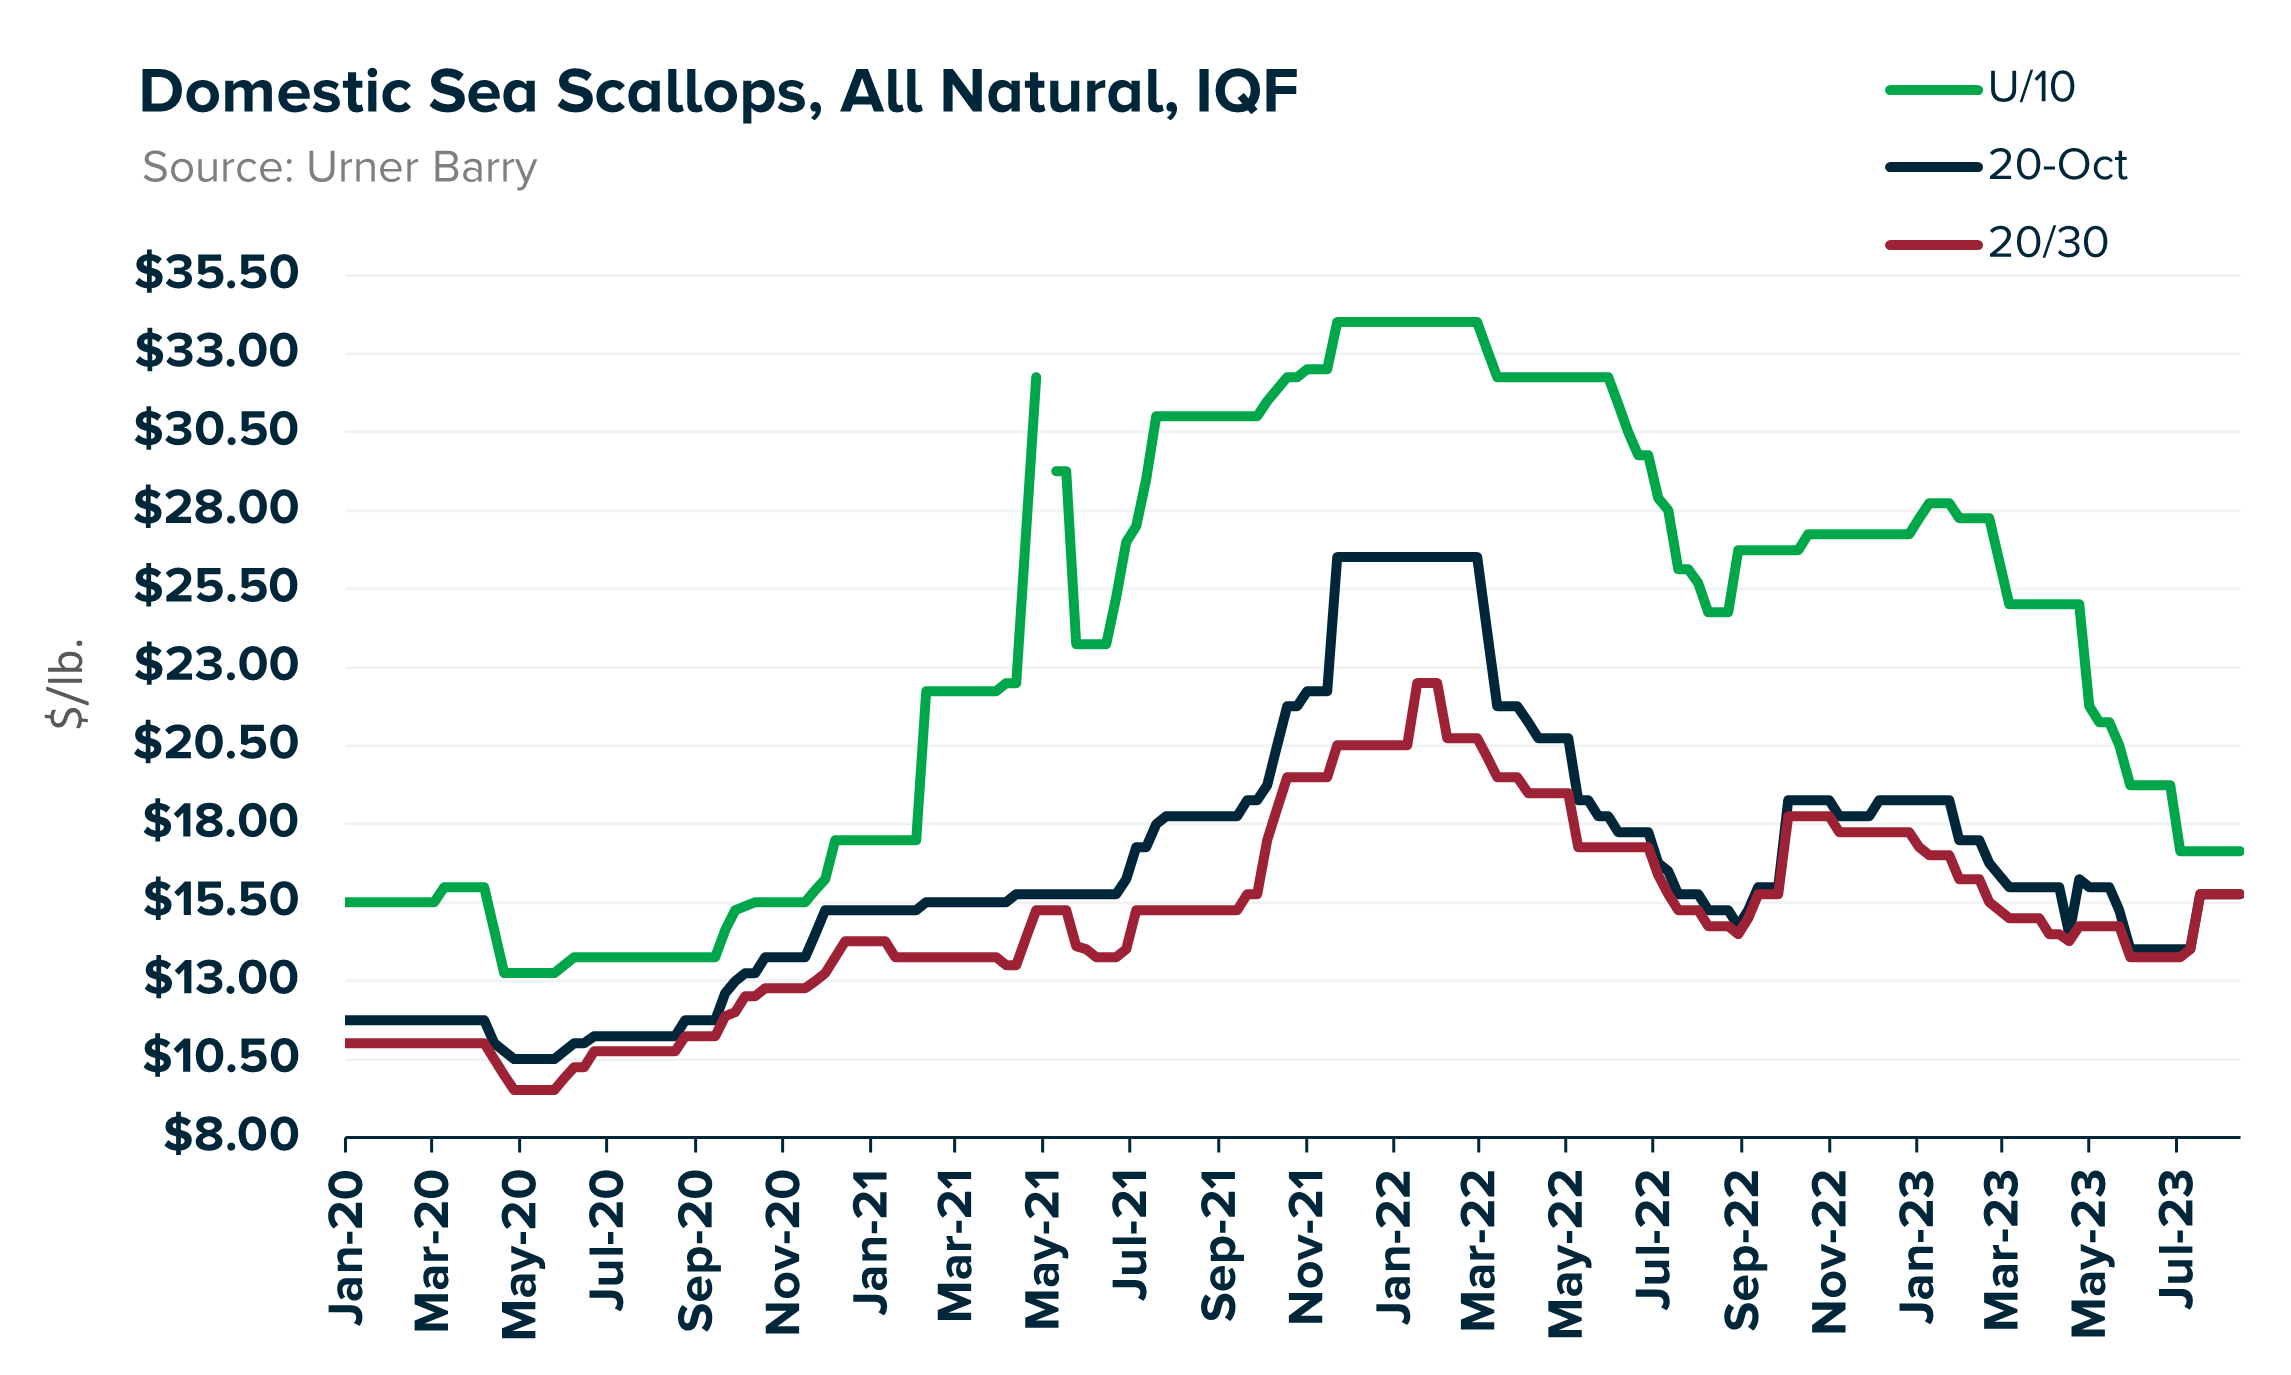 ANALYSIS: Uncertainties Within The Scallop Market